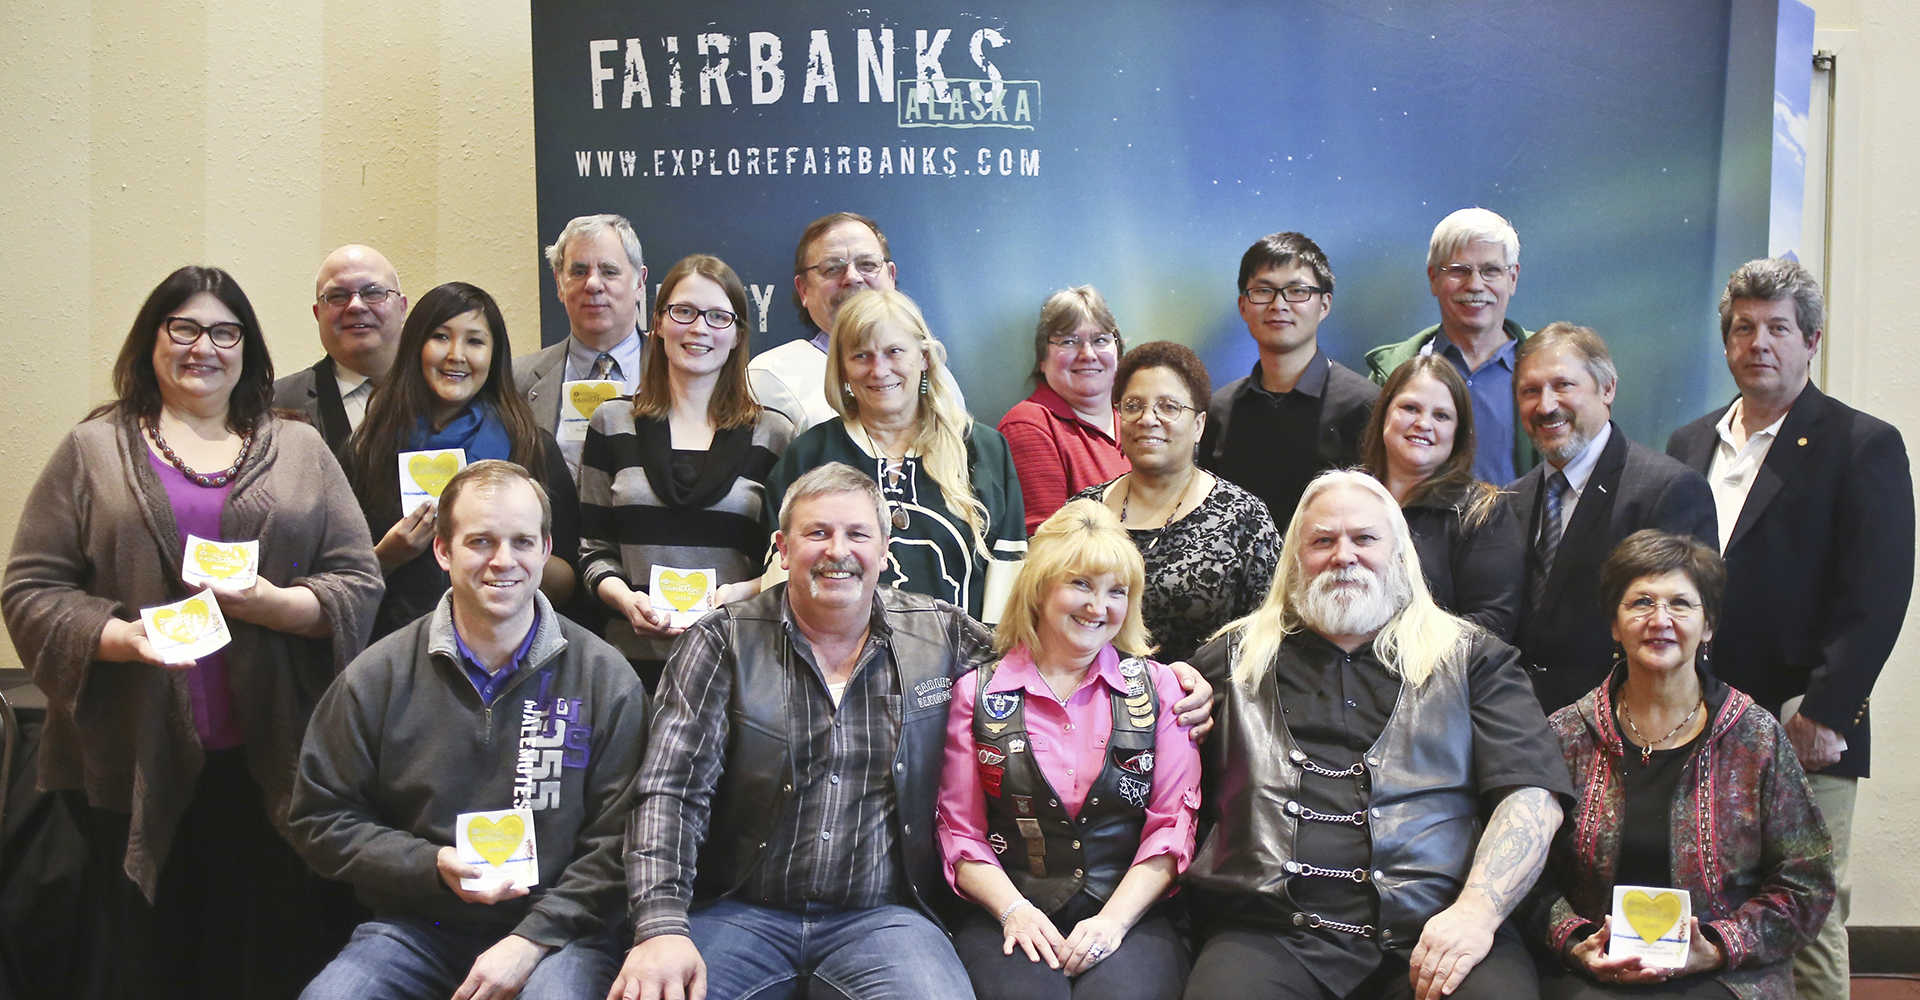 Marketing jobs in fairbanks ak